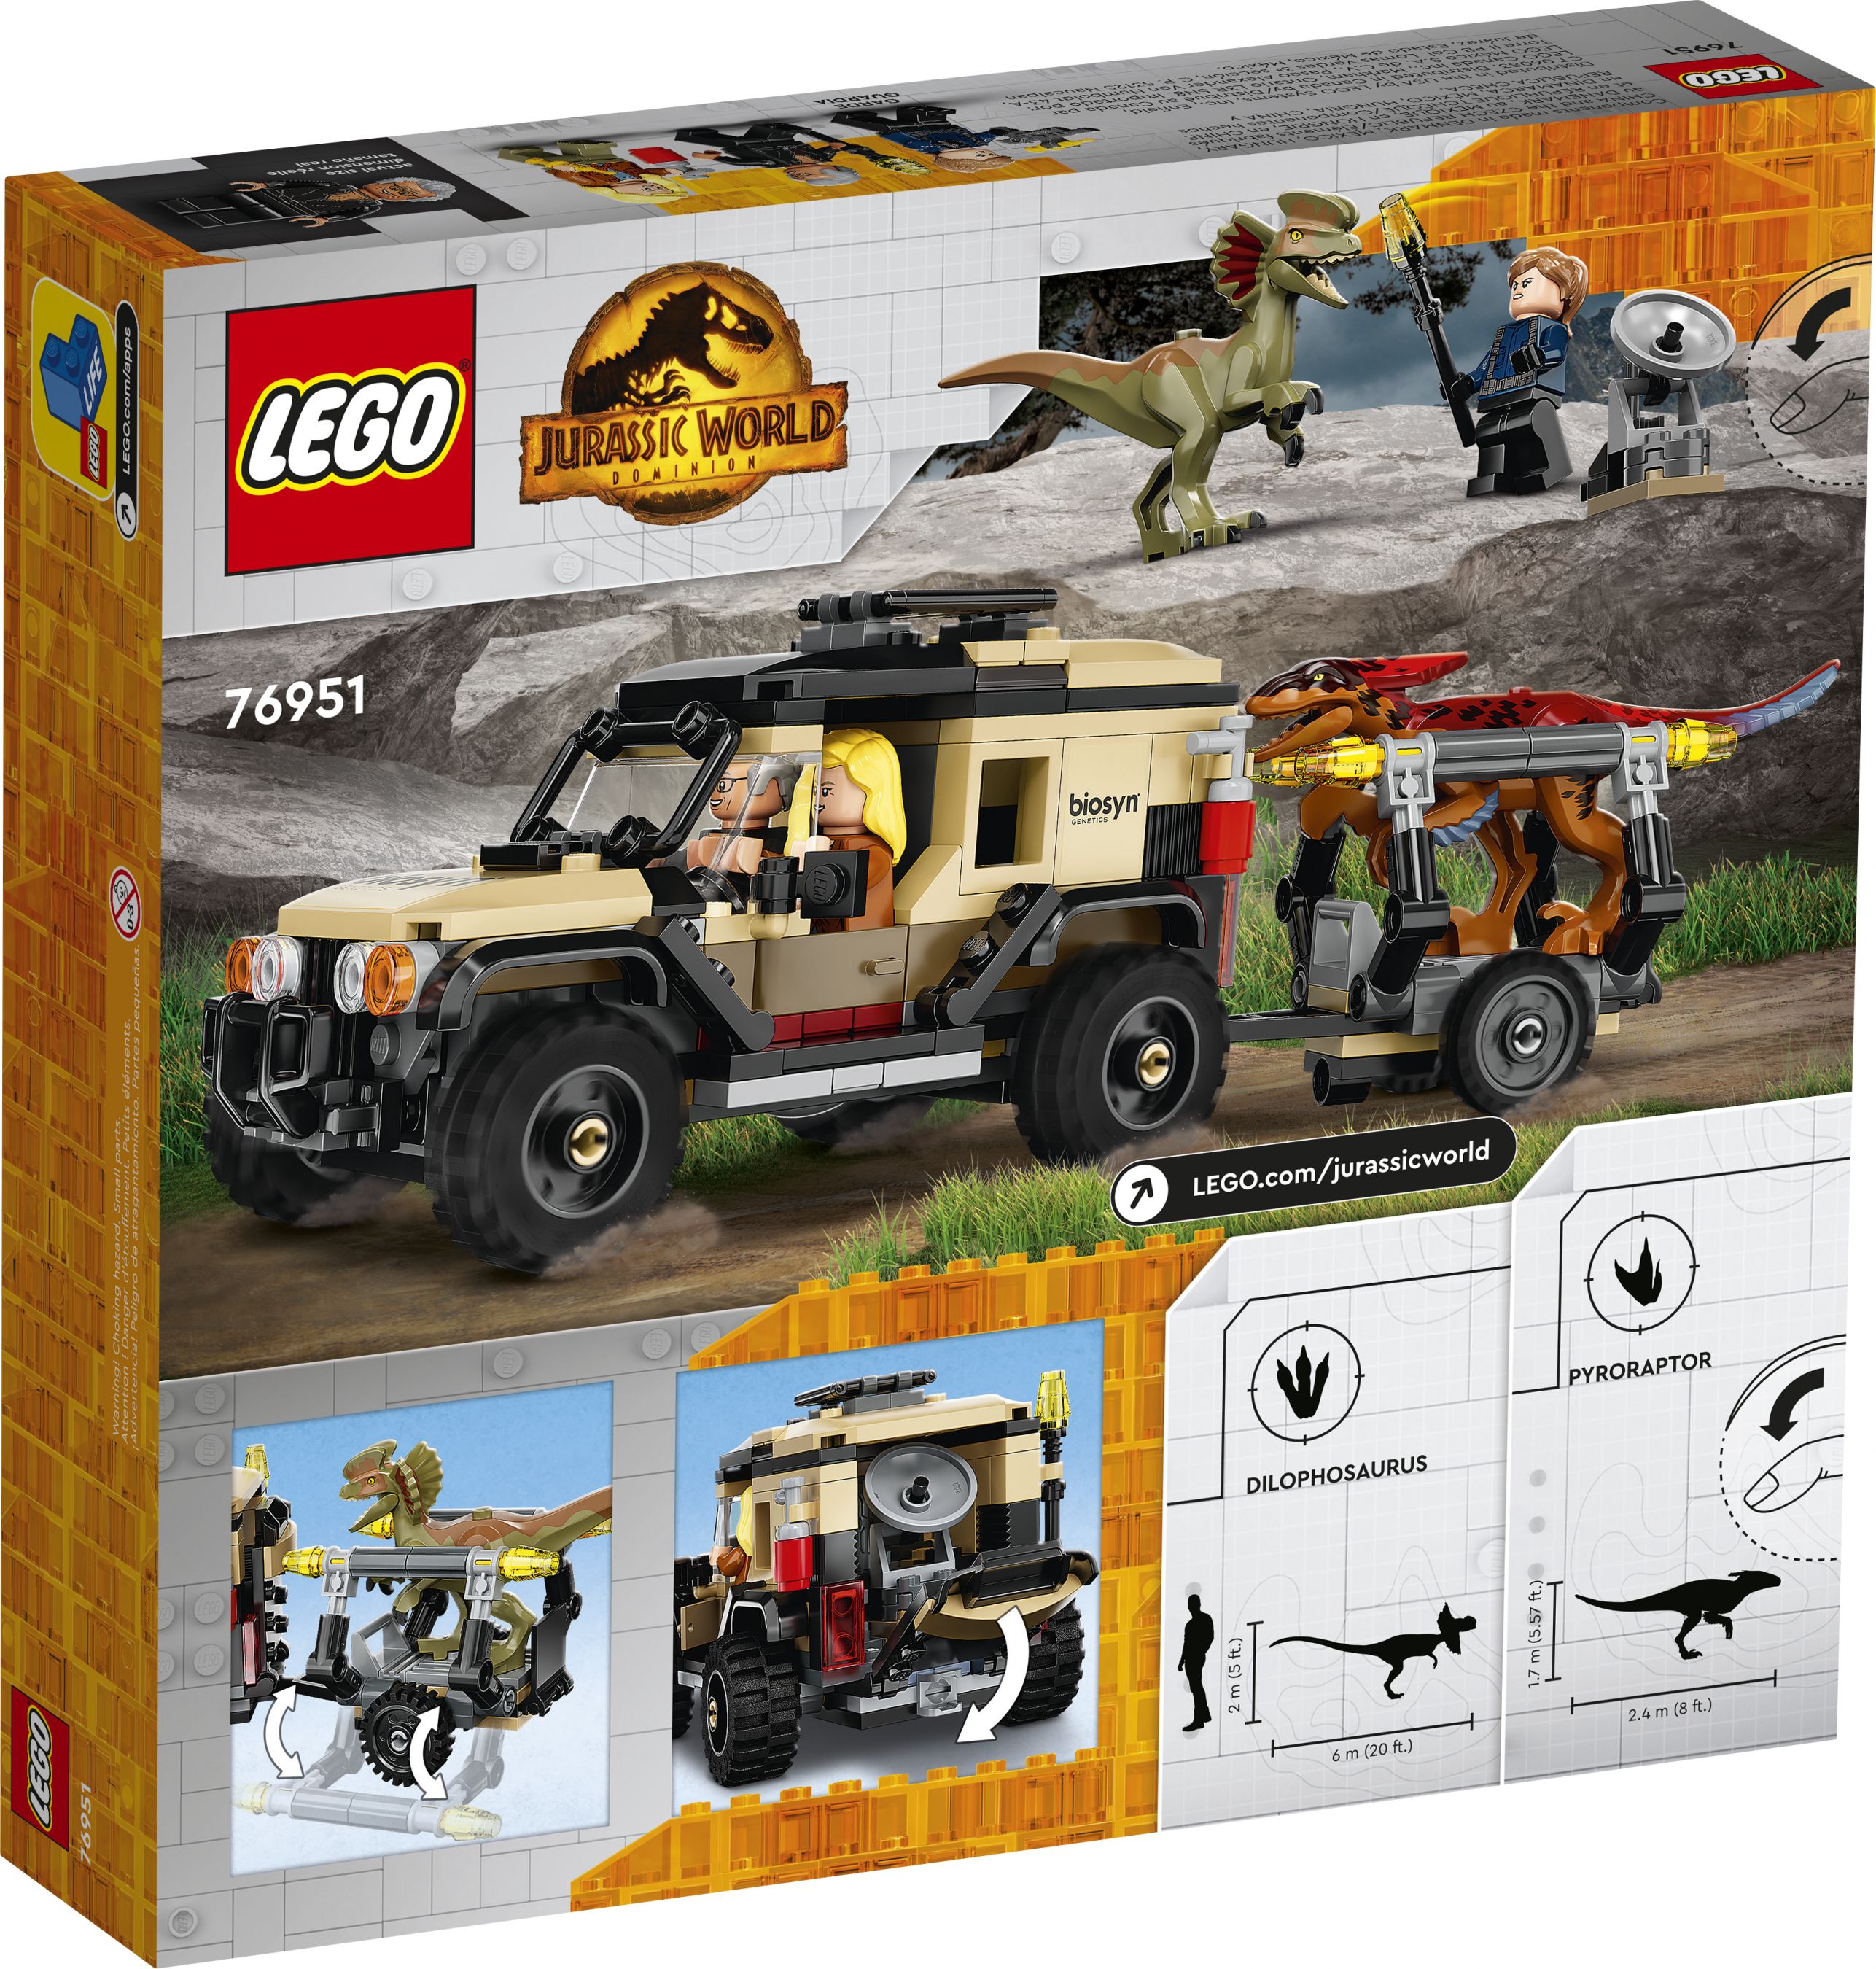 LEGO Jurassic World 76951 Pyroraptor & Dilophosaurus Transport LEGO_76951_Box5_V39.jpg